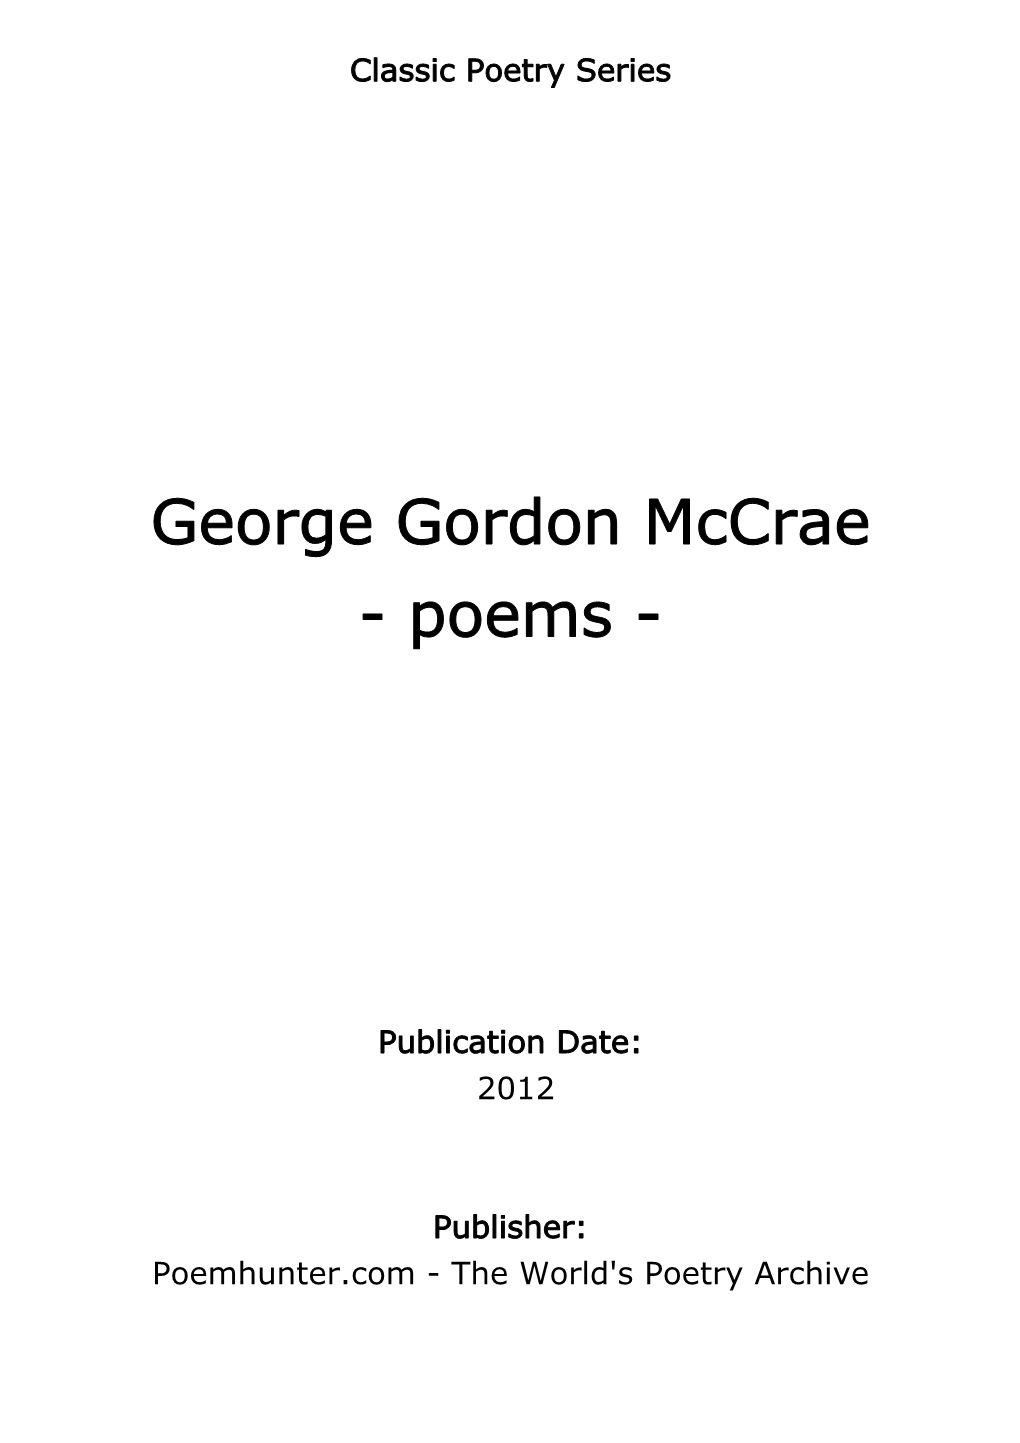 George Gordon Mccrae - Poems